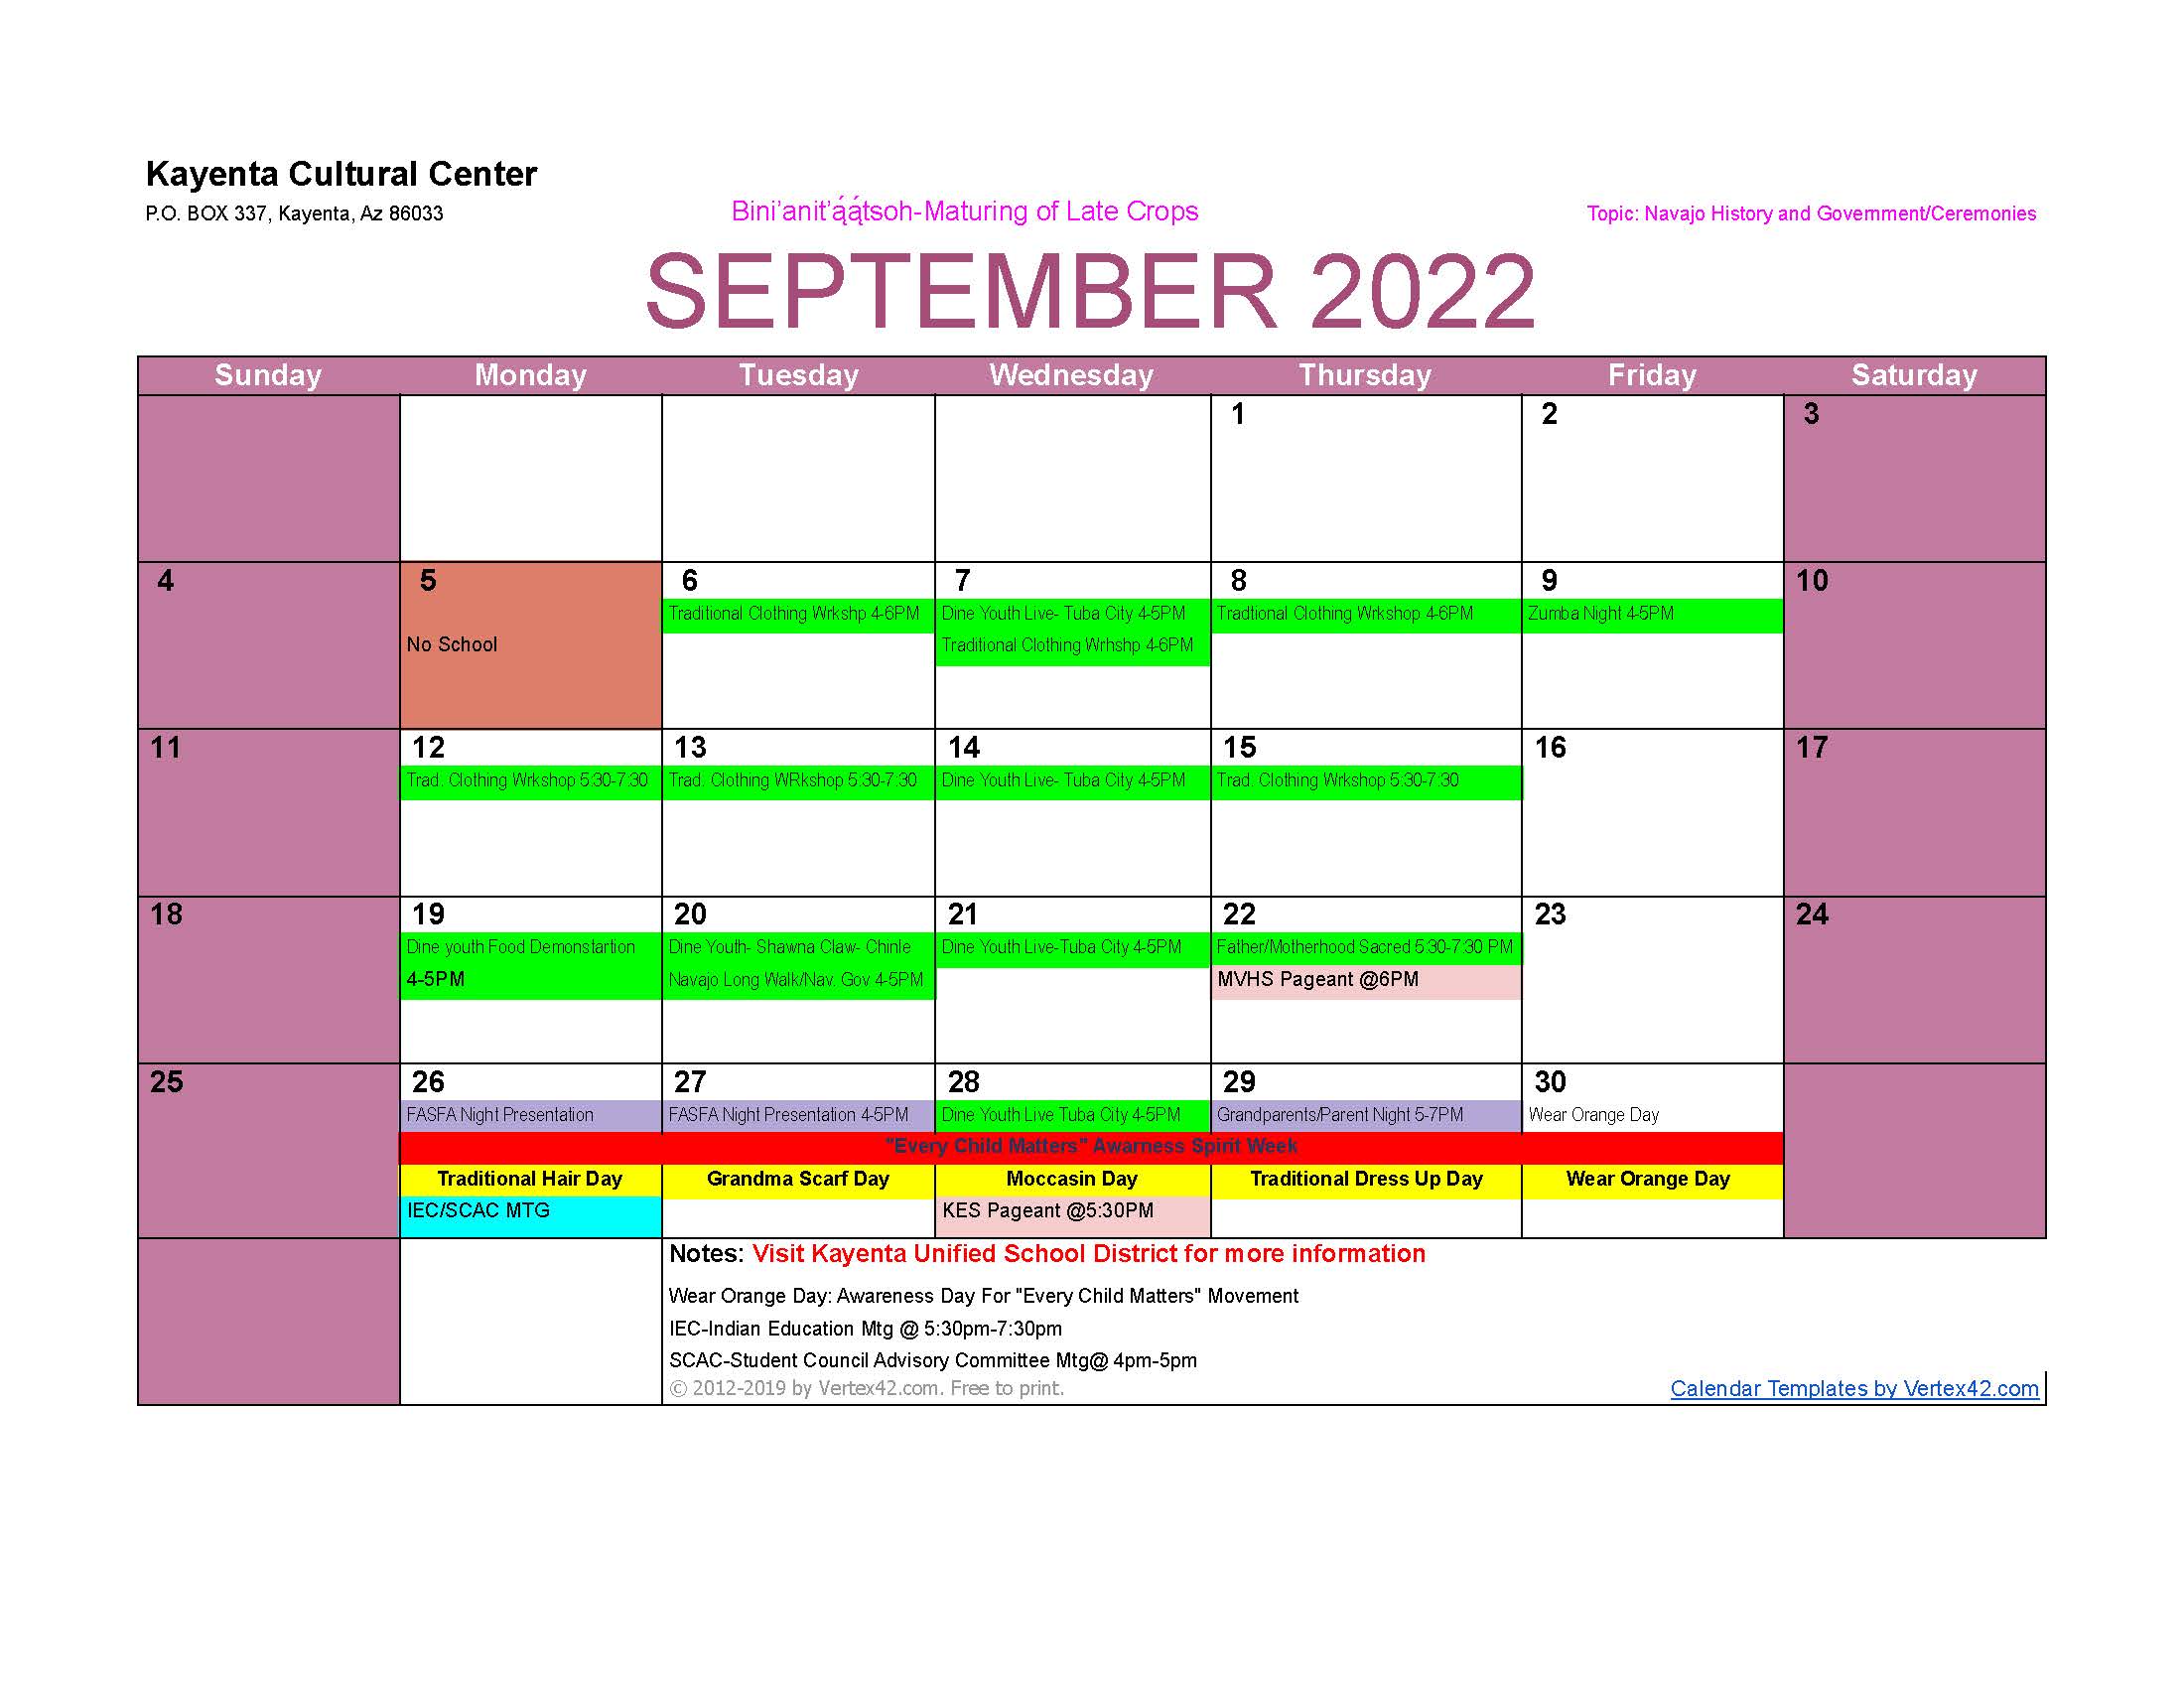 September Event Calendar